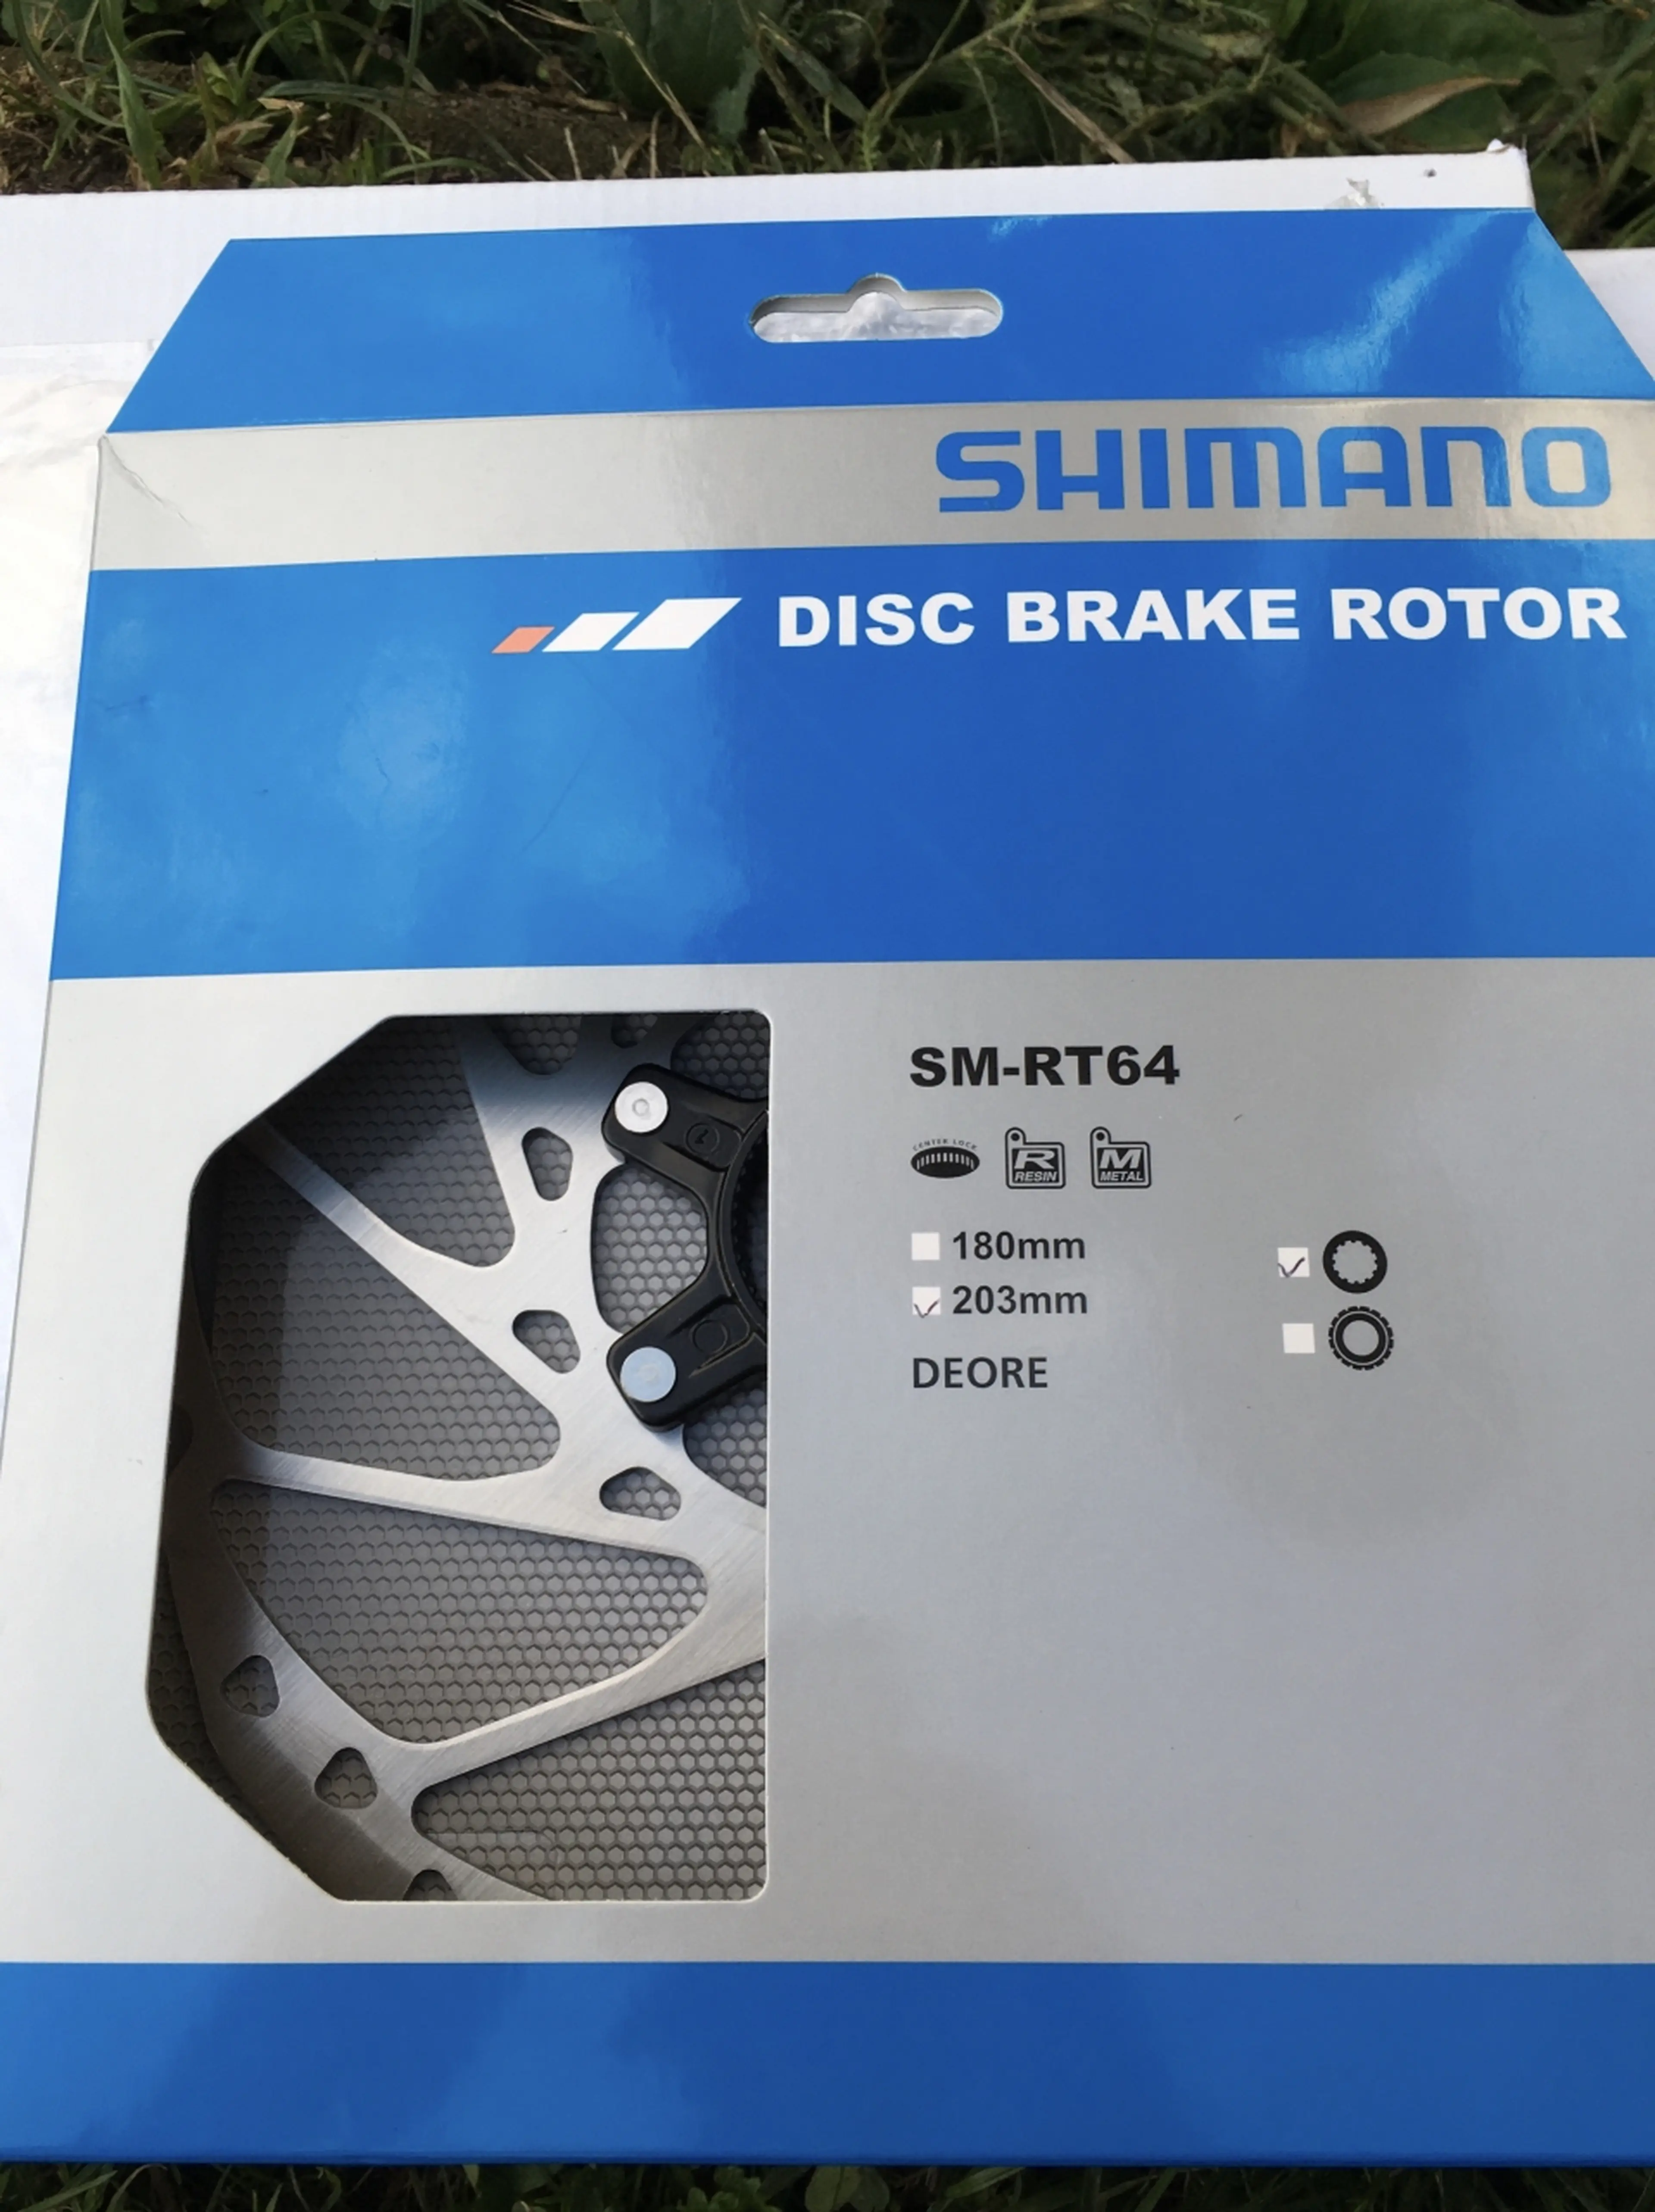 4. Shimano SM-RT64 Deore disc center lock 203mm